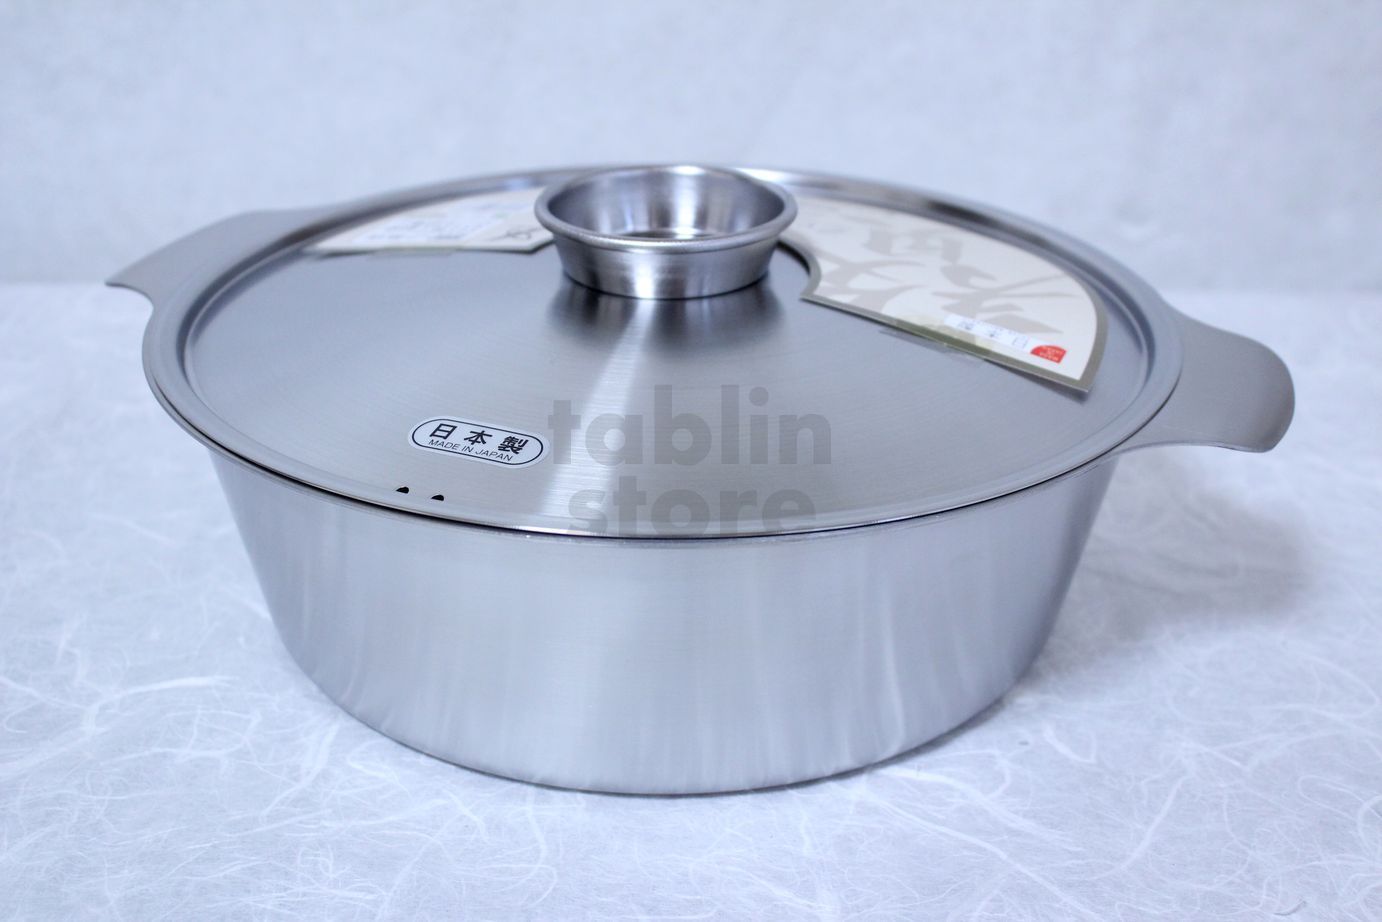 Japanese Stainless Steel Shabu Shabu Nabe Hot Pot 26cm #0033 S-2615 